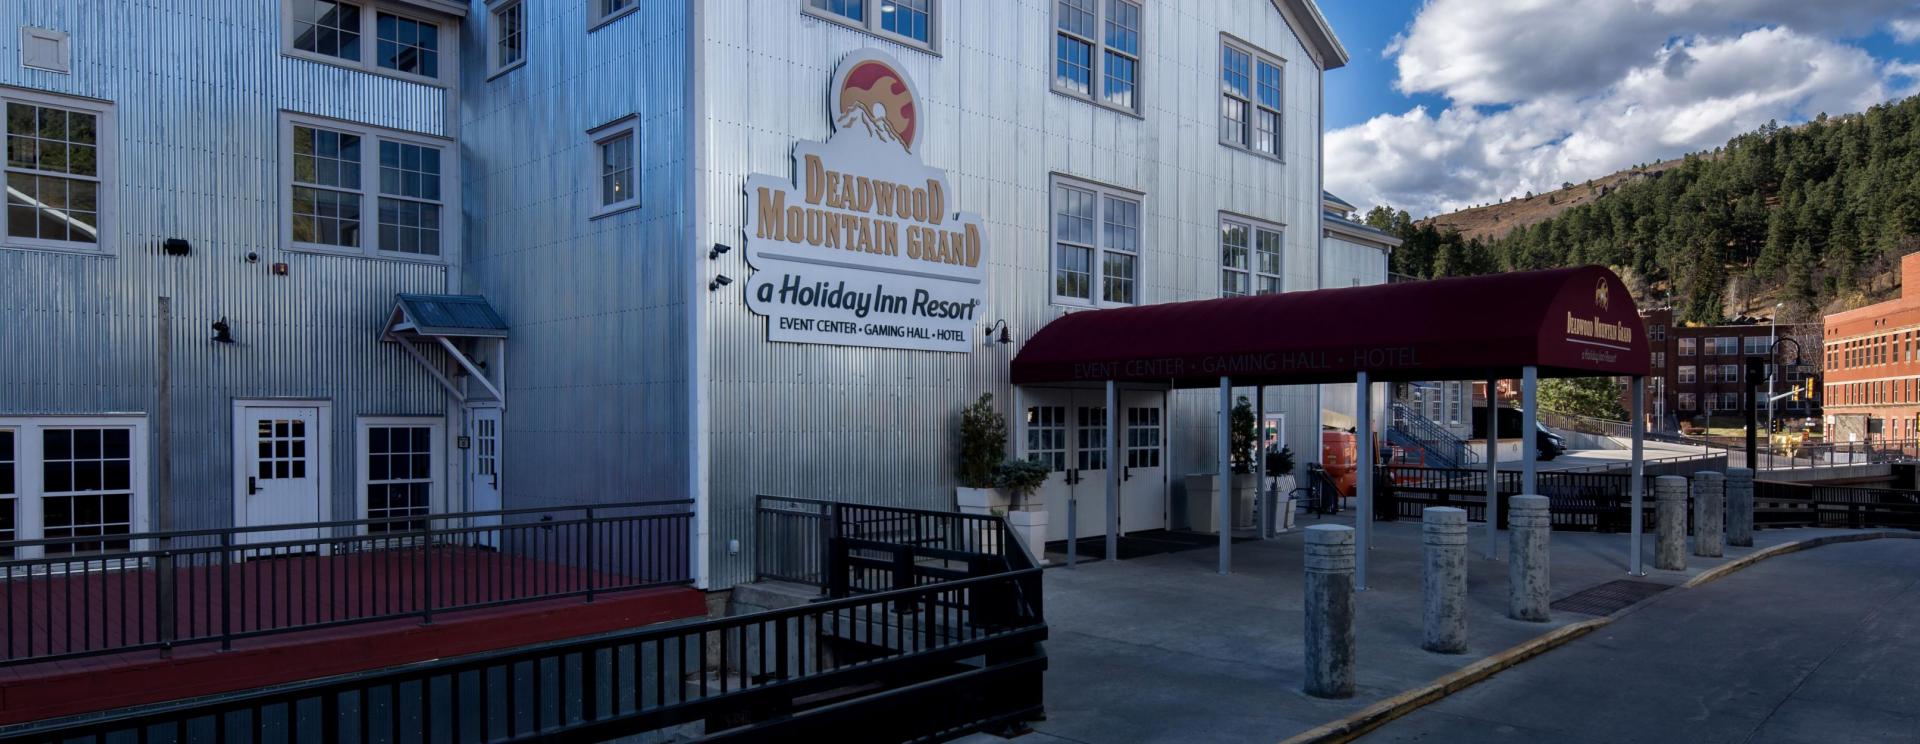 Deadwood Mountain Grand - A Holiday Inn Resort